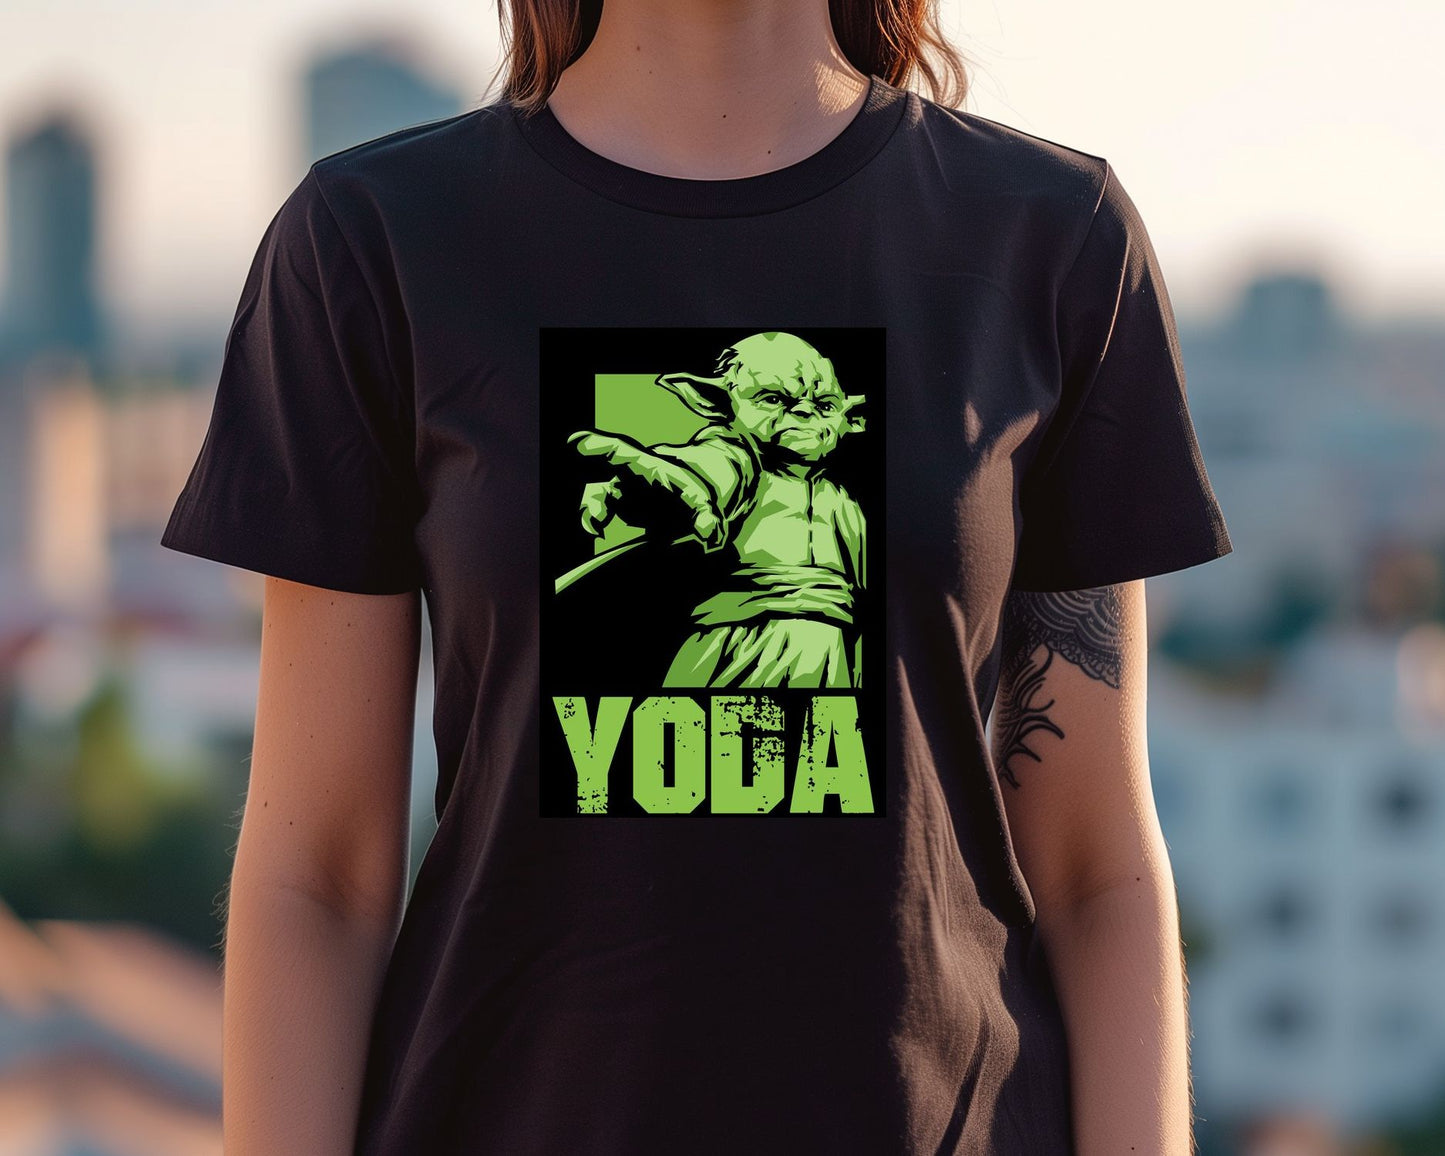 master yoda - @hikenthree